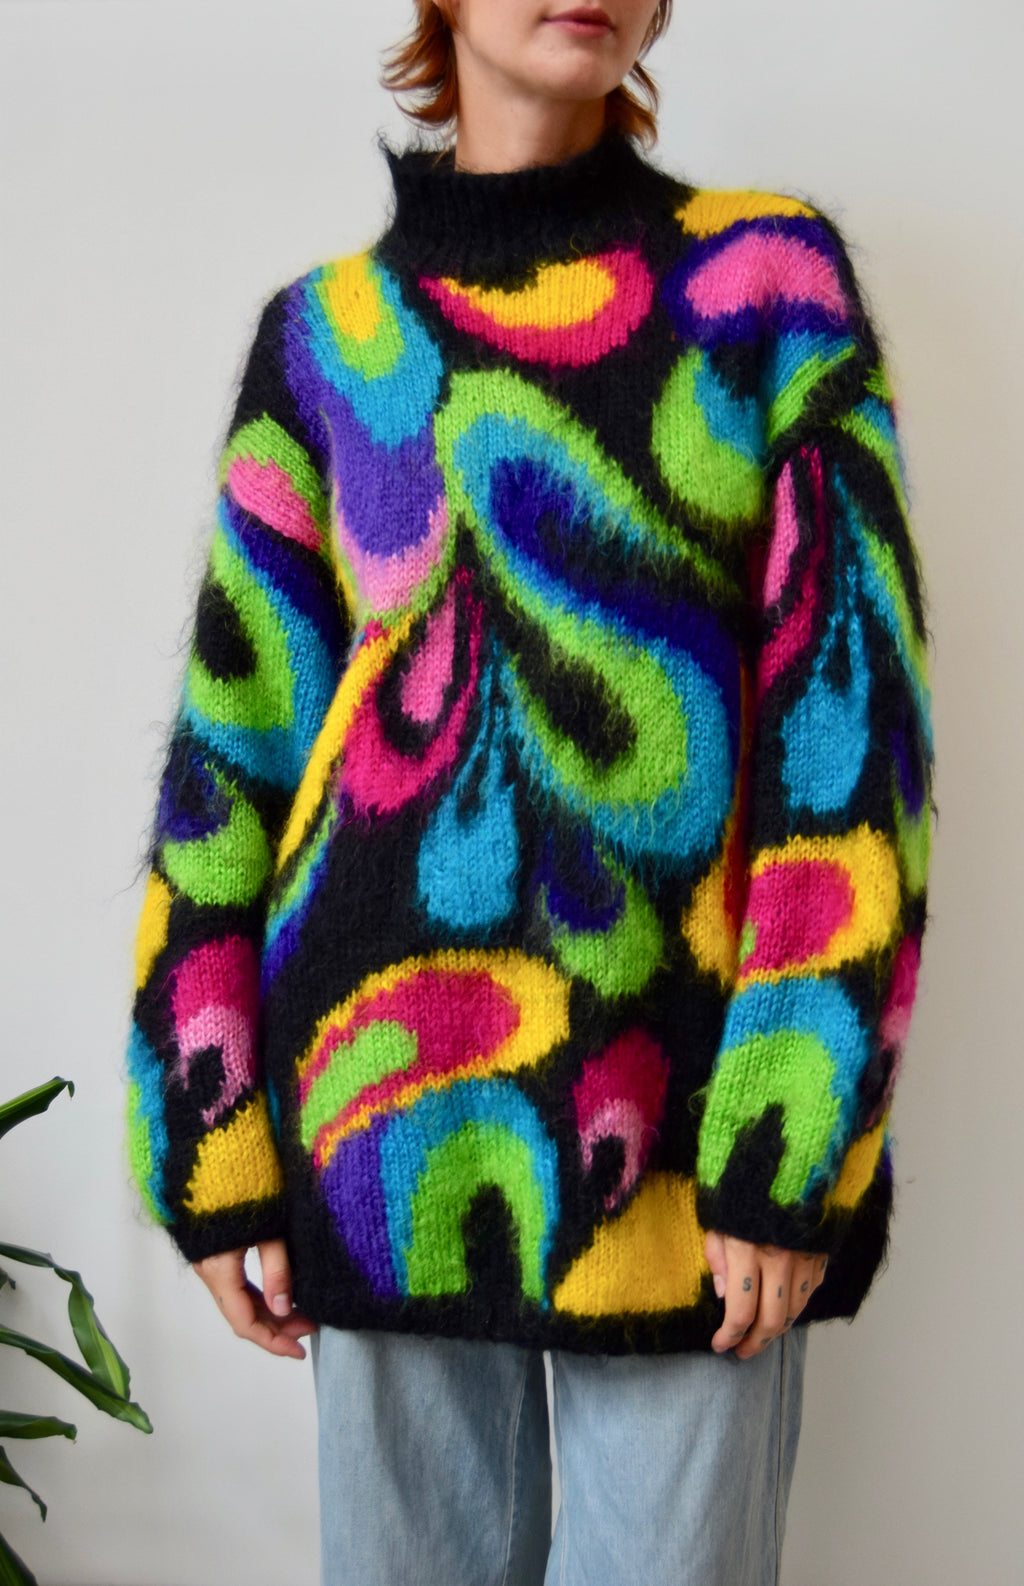 Phoebe Buffay Paisley Mohair Sweater